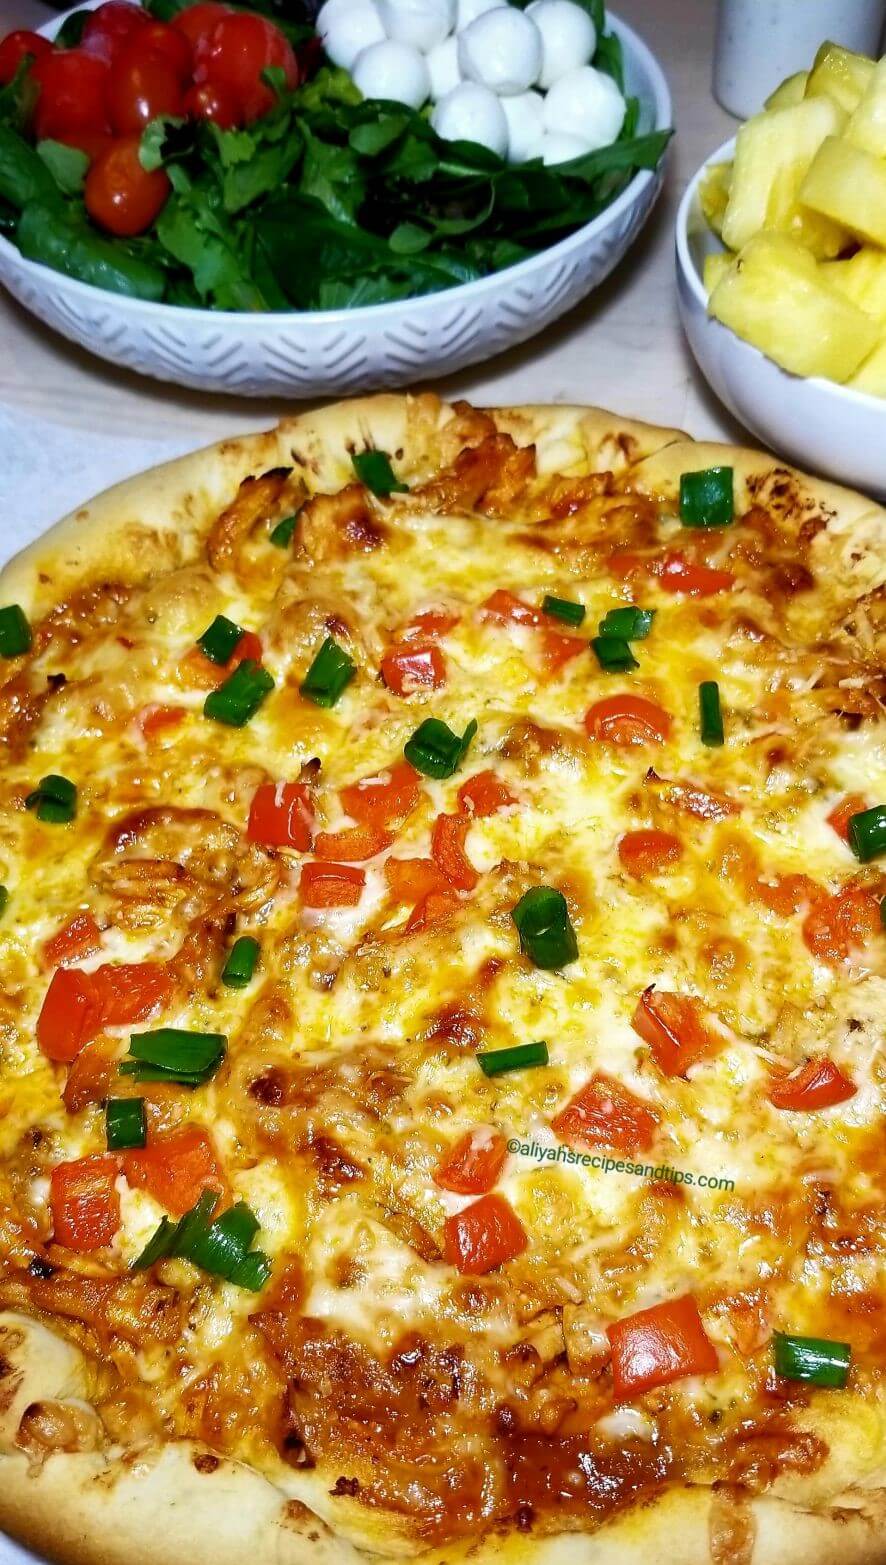 bbq chicken pizza, dominos, papa johns, pizza hut, round table, cpk, blaze, cheese, bacon, pepperoni, gluten free, buffalo chicken, stuffed crust, gourmet, bbq sauce, grilled chicken, recipe, easy, boston pizza, yard house, easy, recipe, chicago style, bbq chicken pizza, homemade bbq chicken pizza, almost-famous bbq chicken pizza, barbecue chicken pizza, weeknight bbq chicken pizza